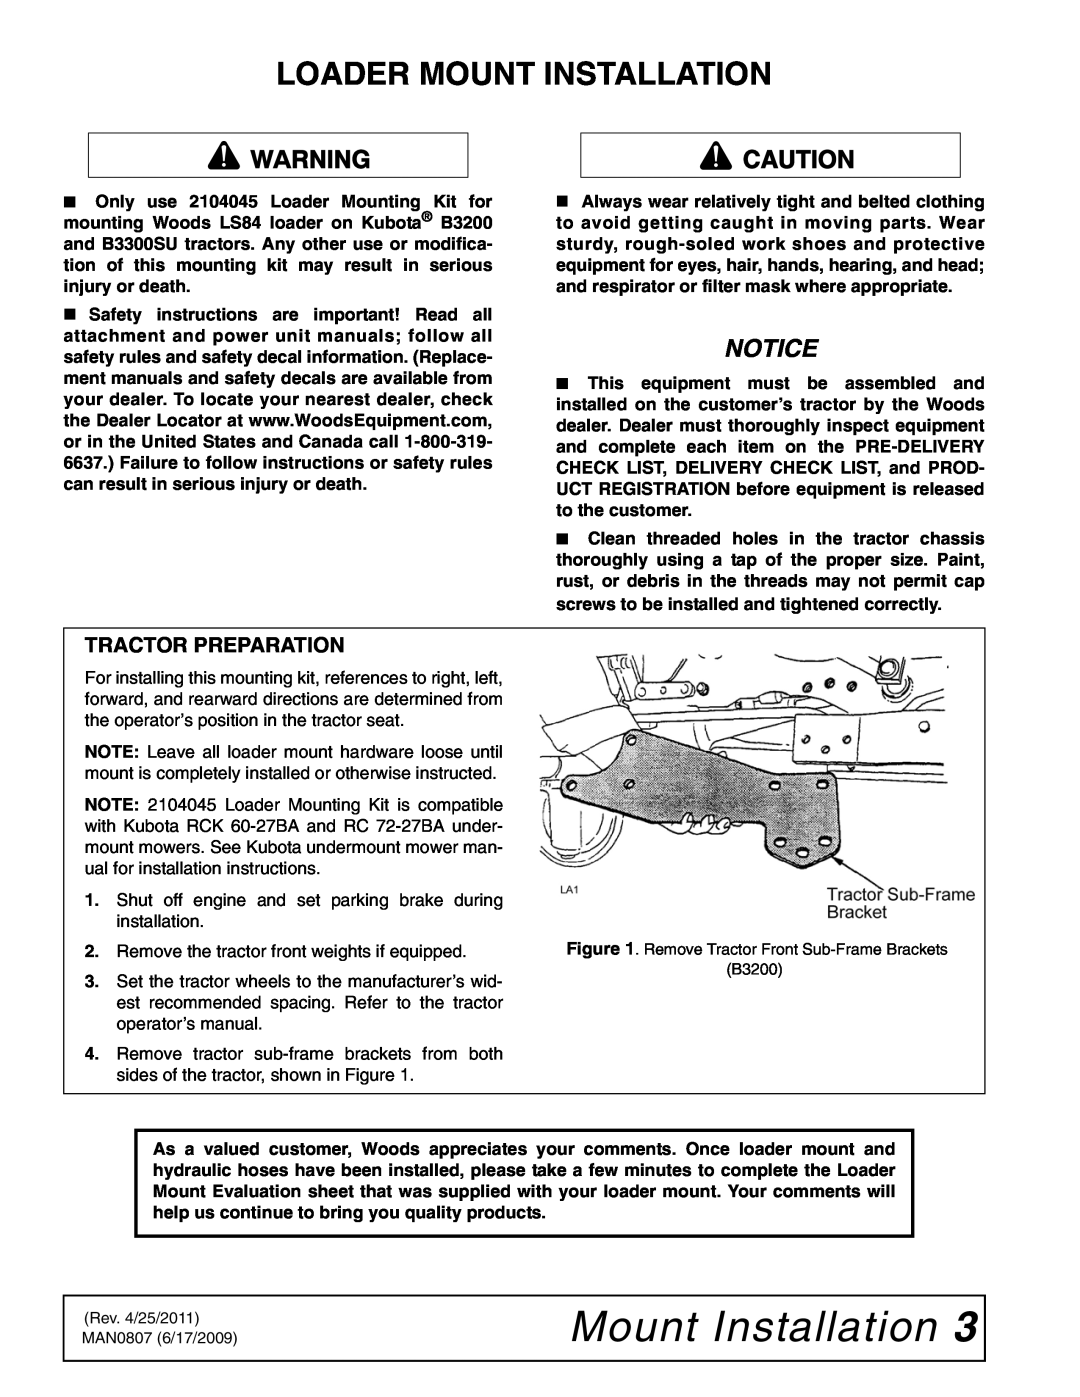 Woods Equipment 2104045 installation manual Loader Mount Installation, Tractor Preparation 